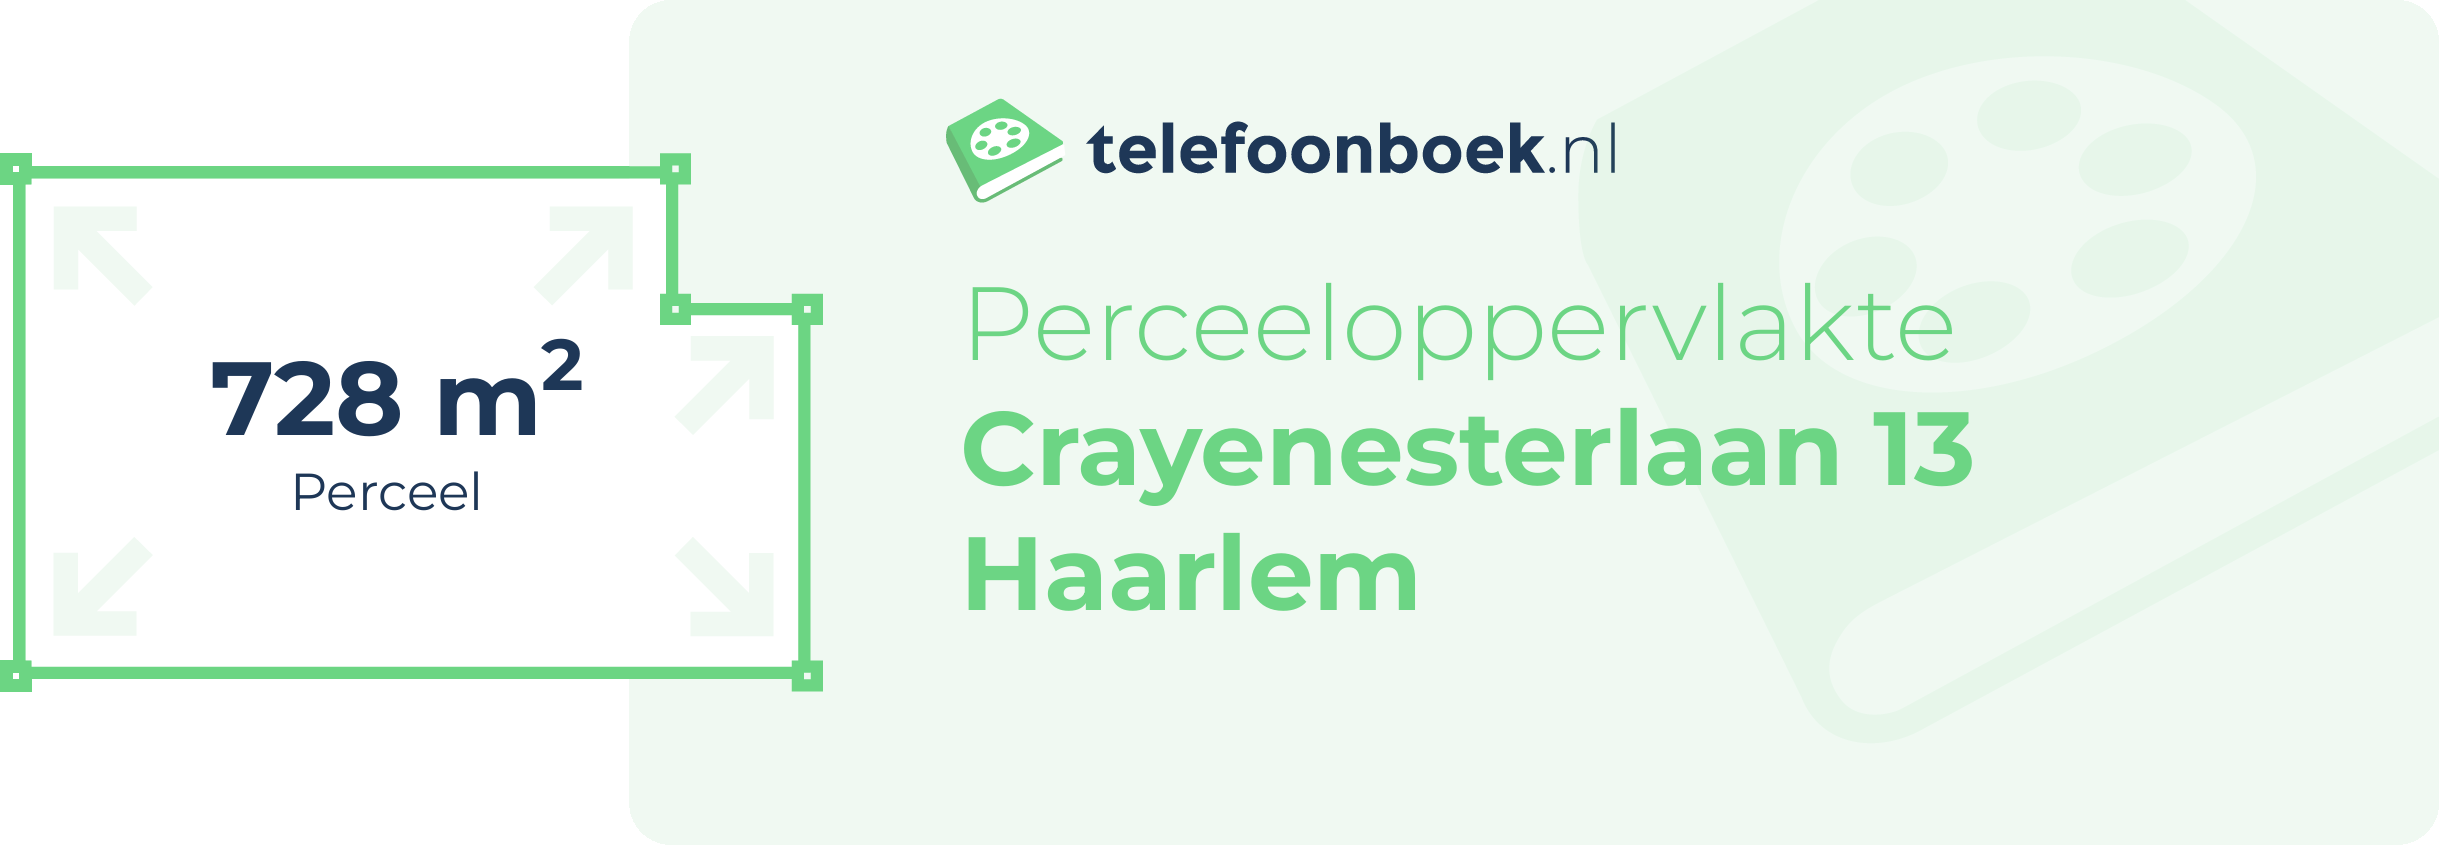 Perceeloppervlakte Crayenesterlaan 13 Haarlem